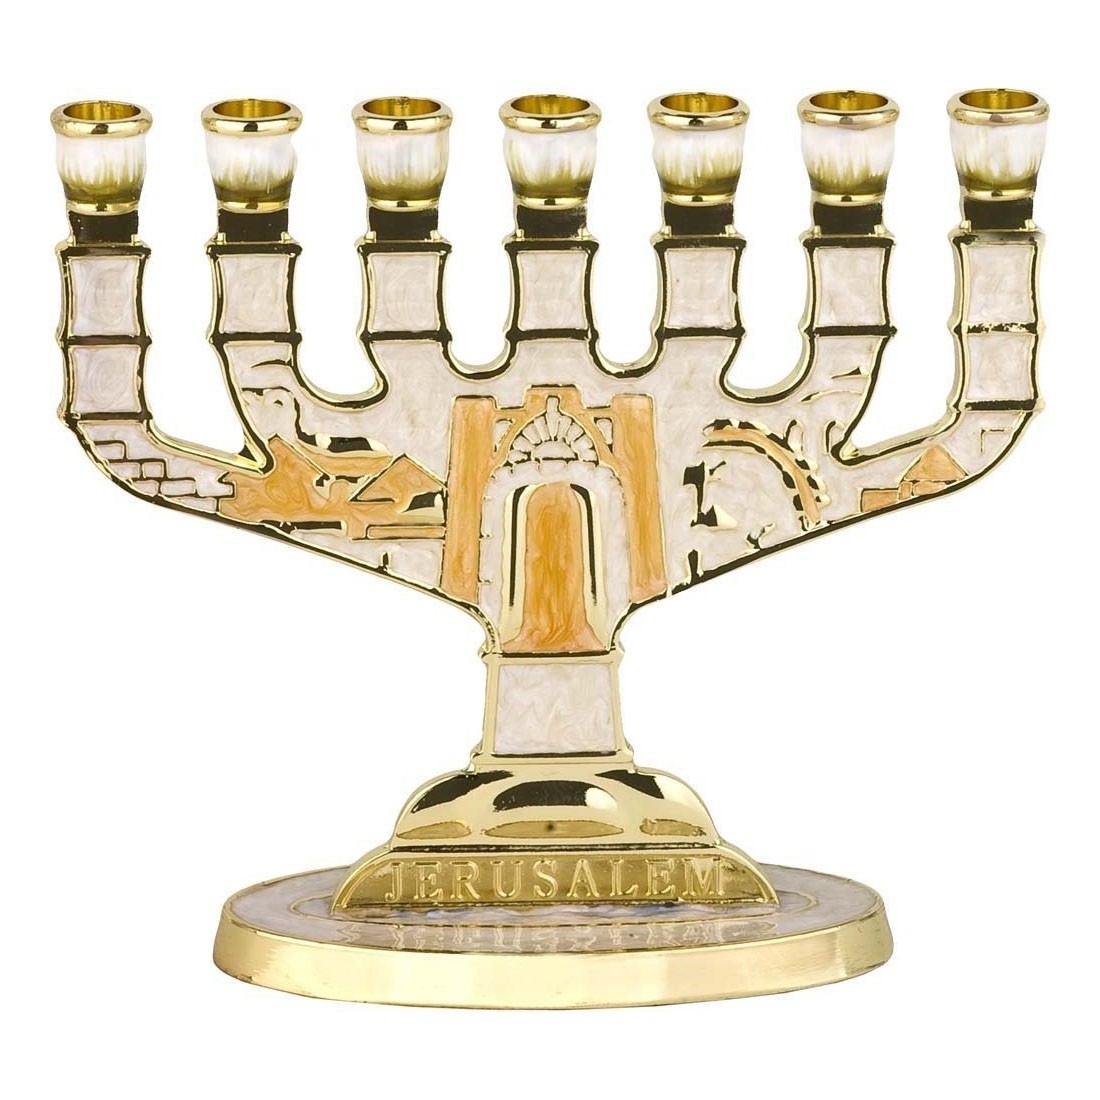 Miniature Gold Tone White Enameled 7-Branched Menorah with Jerusalem Gate Design - 1